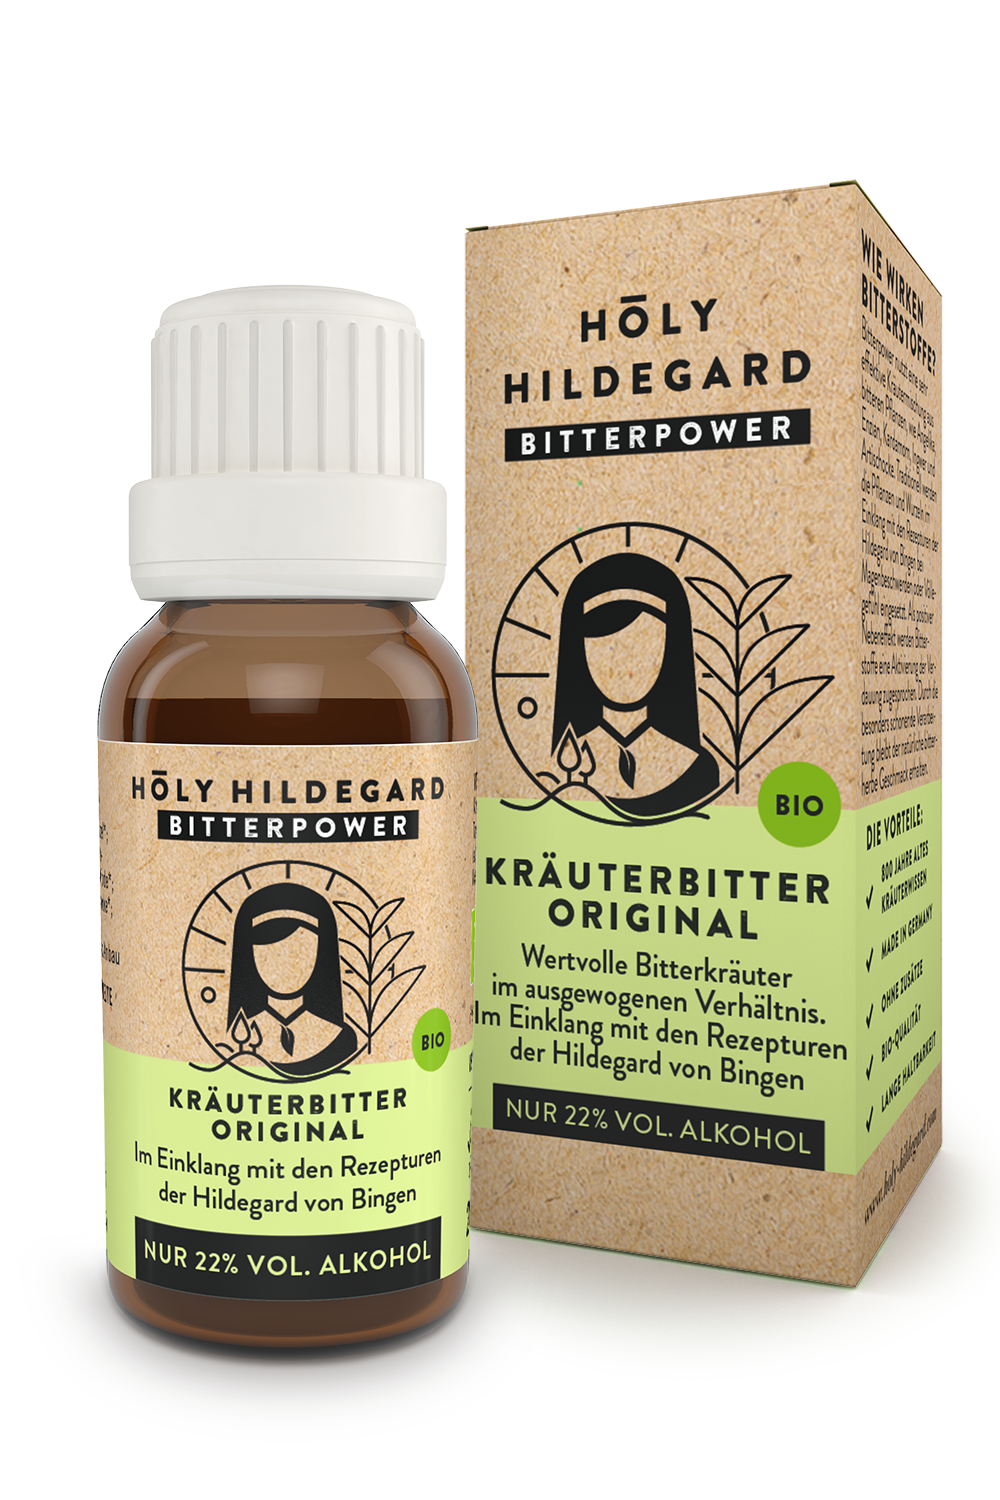 Holy Hildegard BitterPower Kräuterbitter Original (BIO) 20 ml